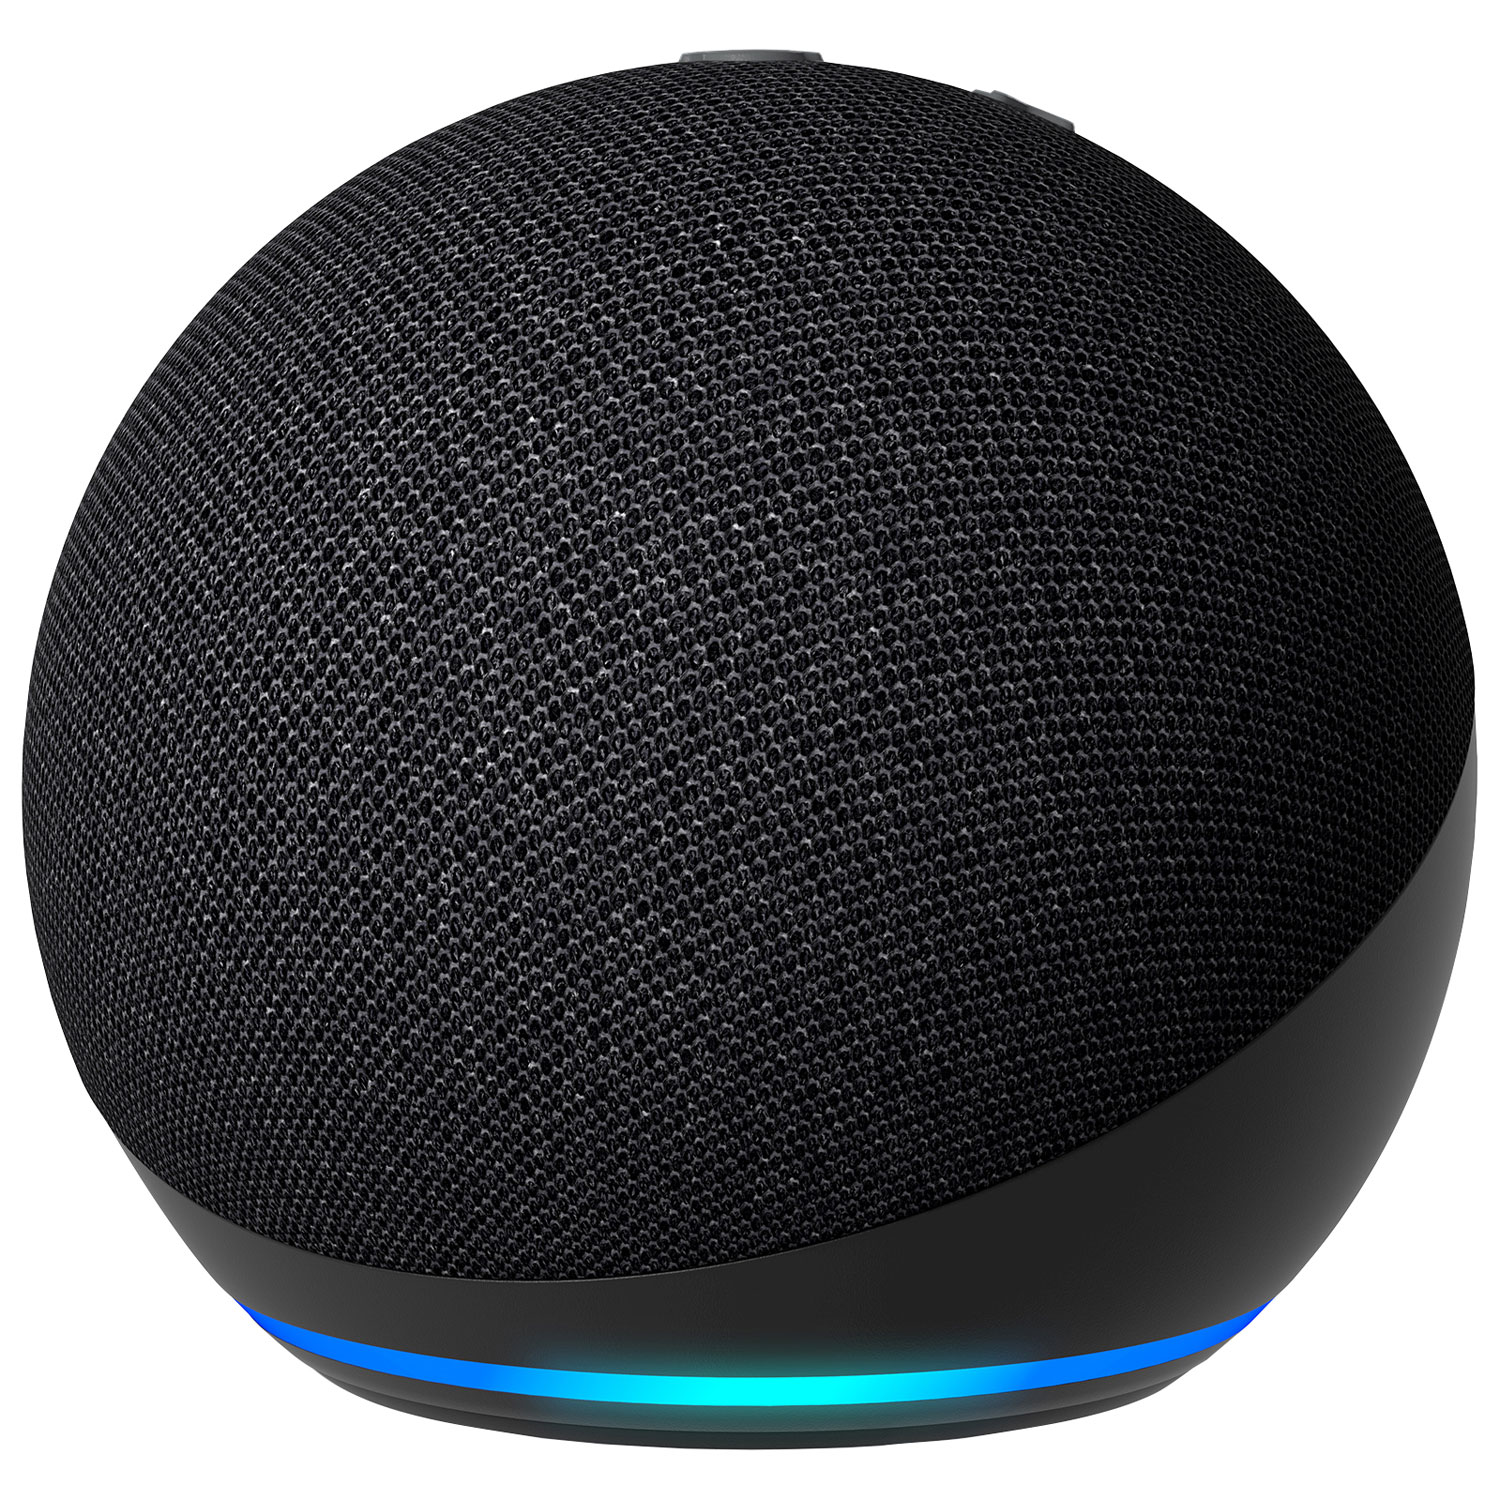 Best Buy:  Echo Dot (2nd generation) Smart Speaker with Alexa White  B015TJD0Y4